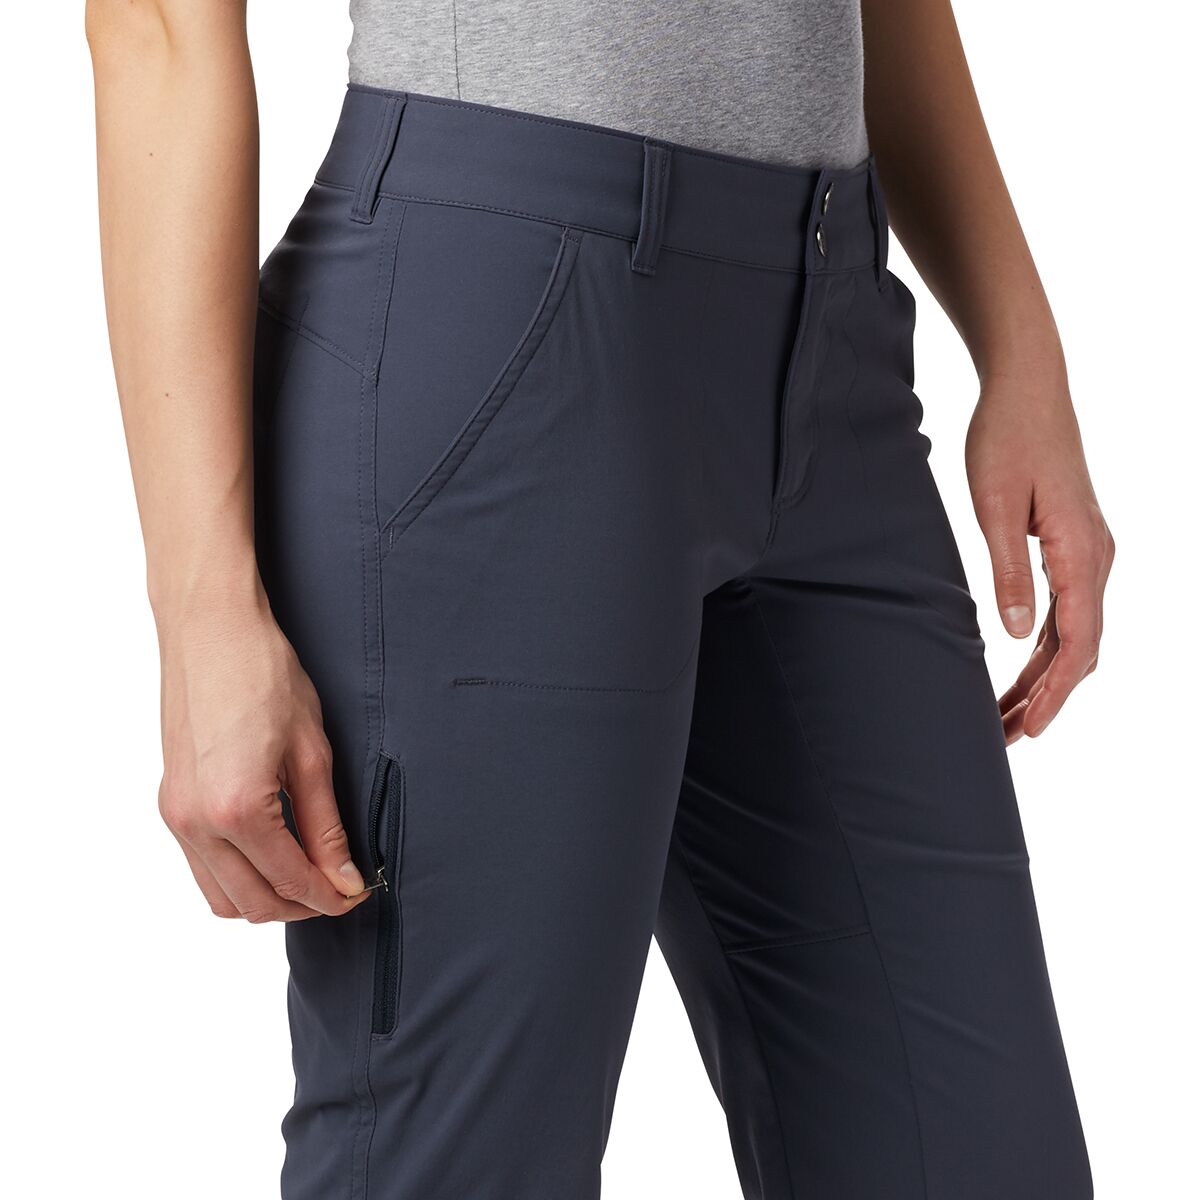 Women's Pants With Zipper Pocket